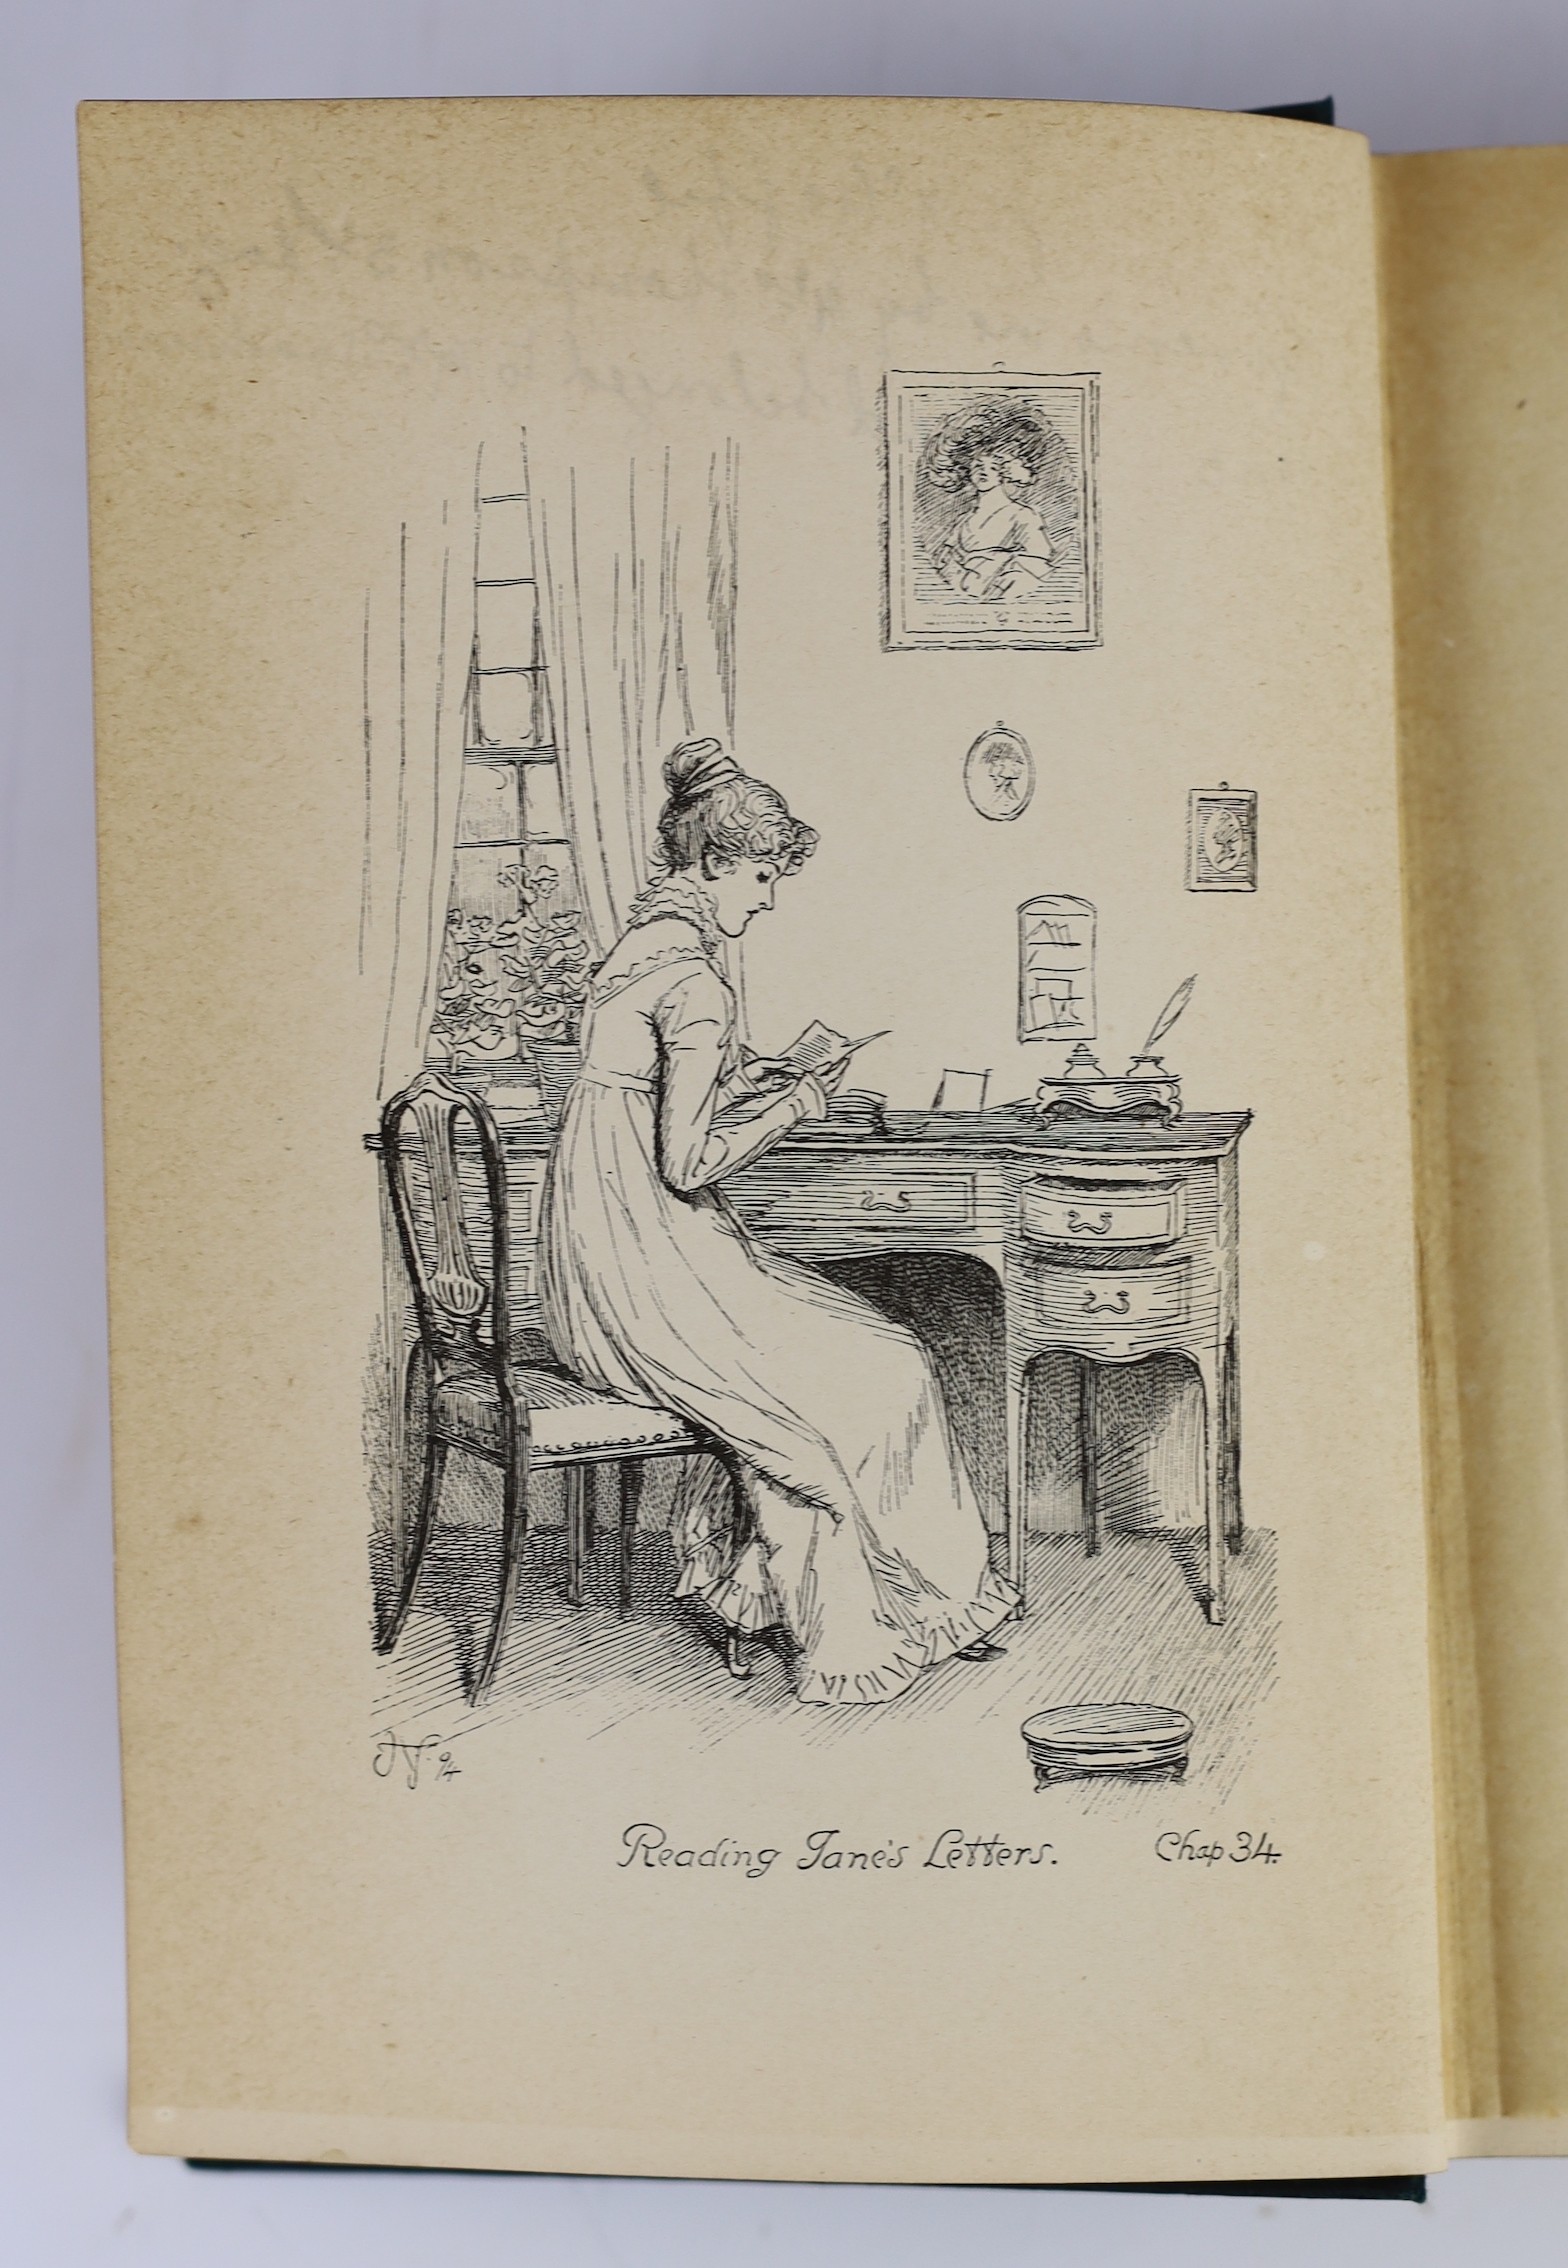 Austen, Jane - Pride and Prejudice, illustrated by Hugh Thomson, the “Peacock edition’’, 8vo, original cloth gilt, George Allen, London, 1894